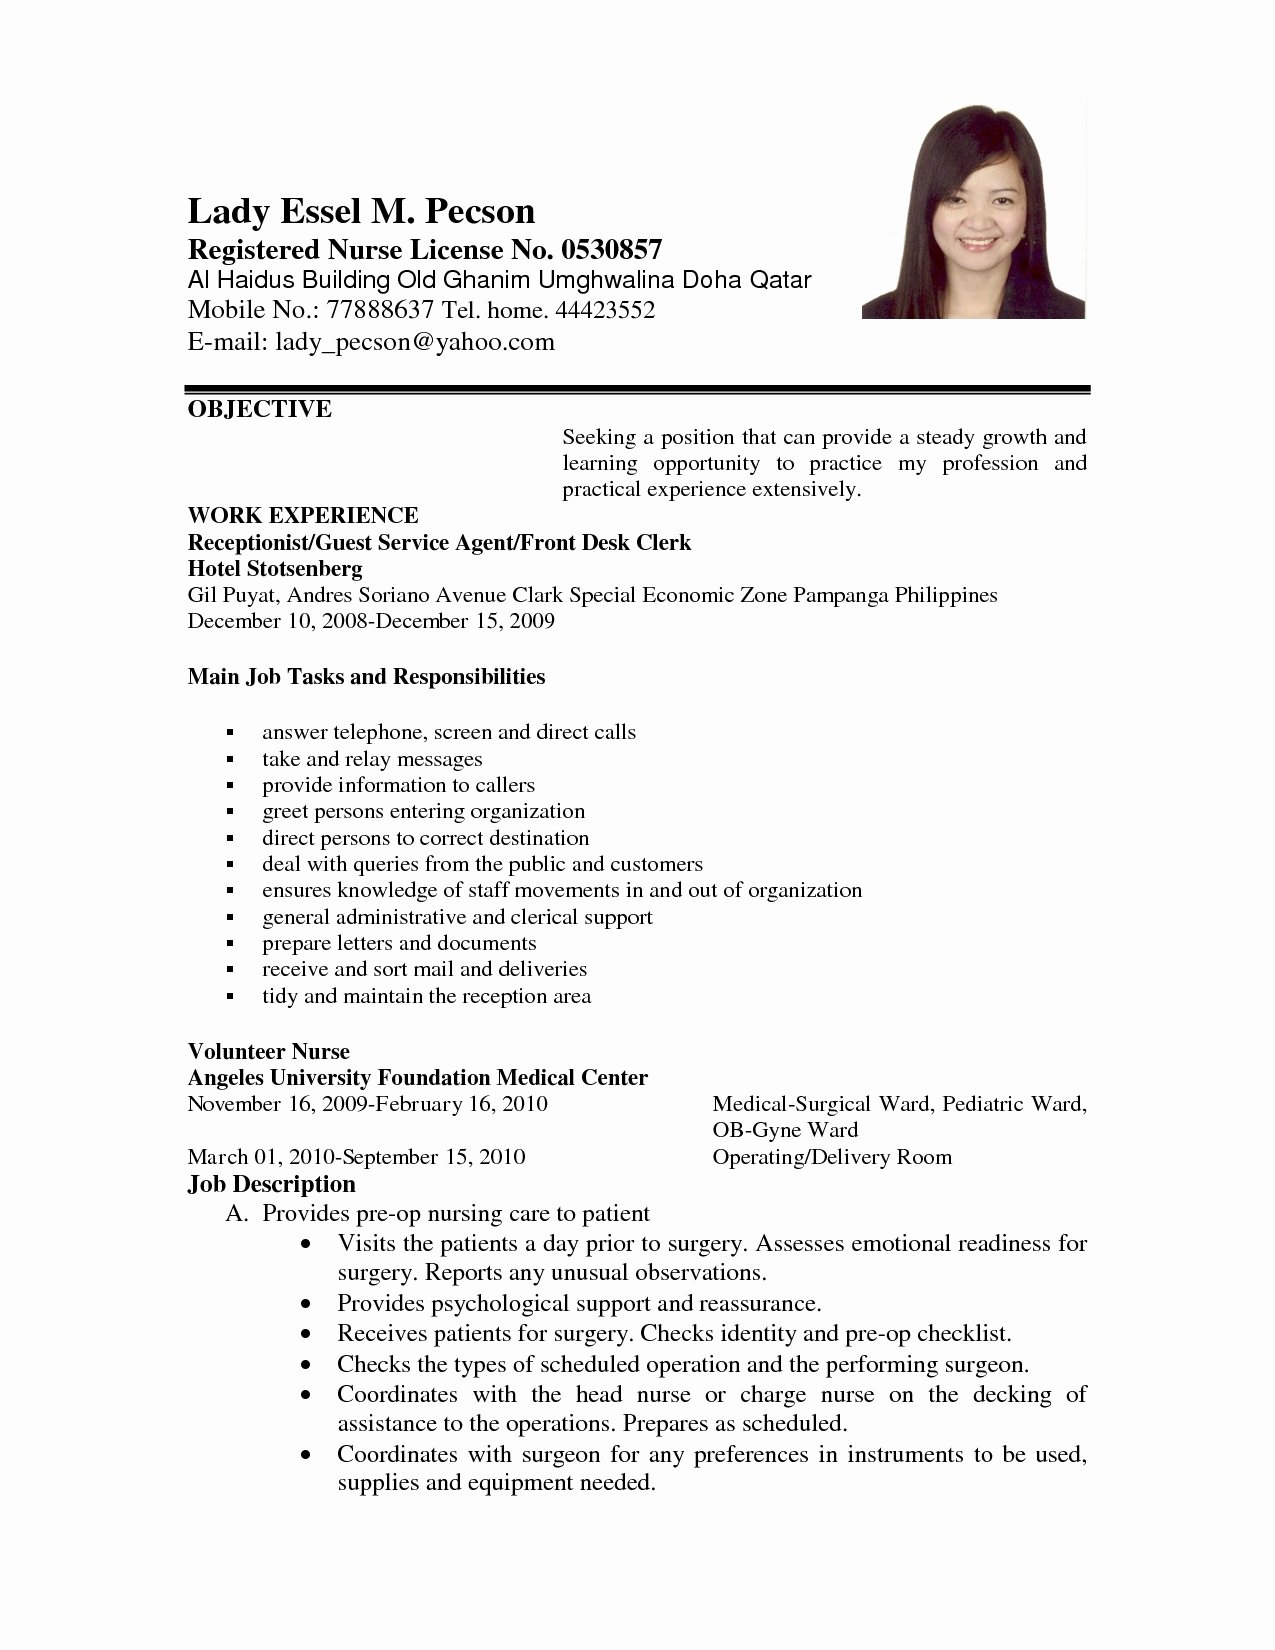 Example Resume Letter for Job Application